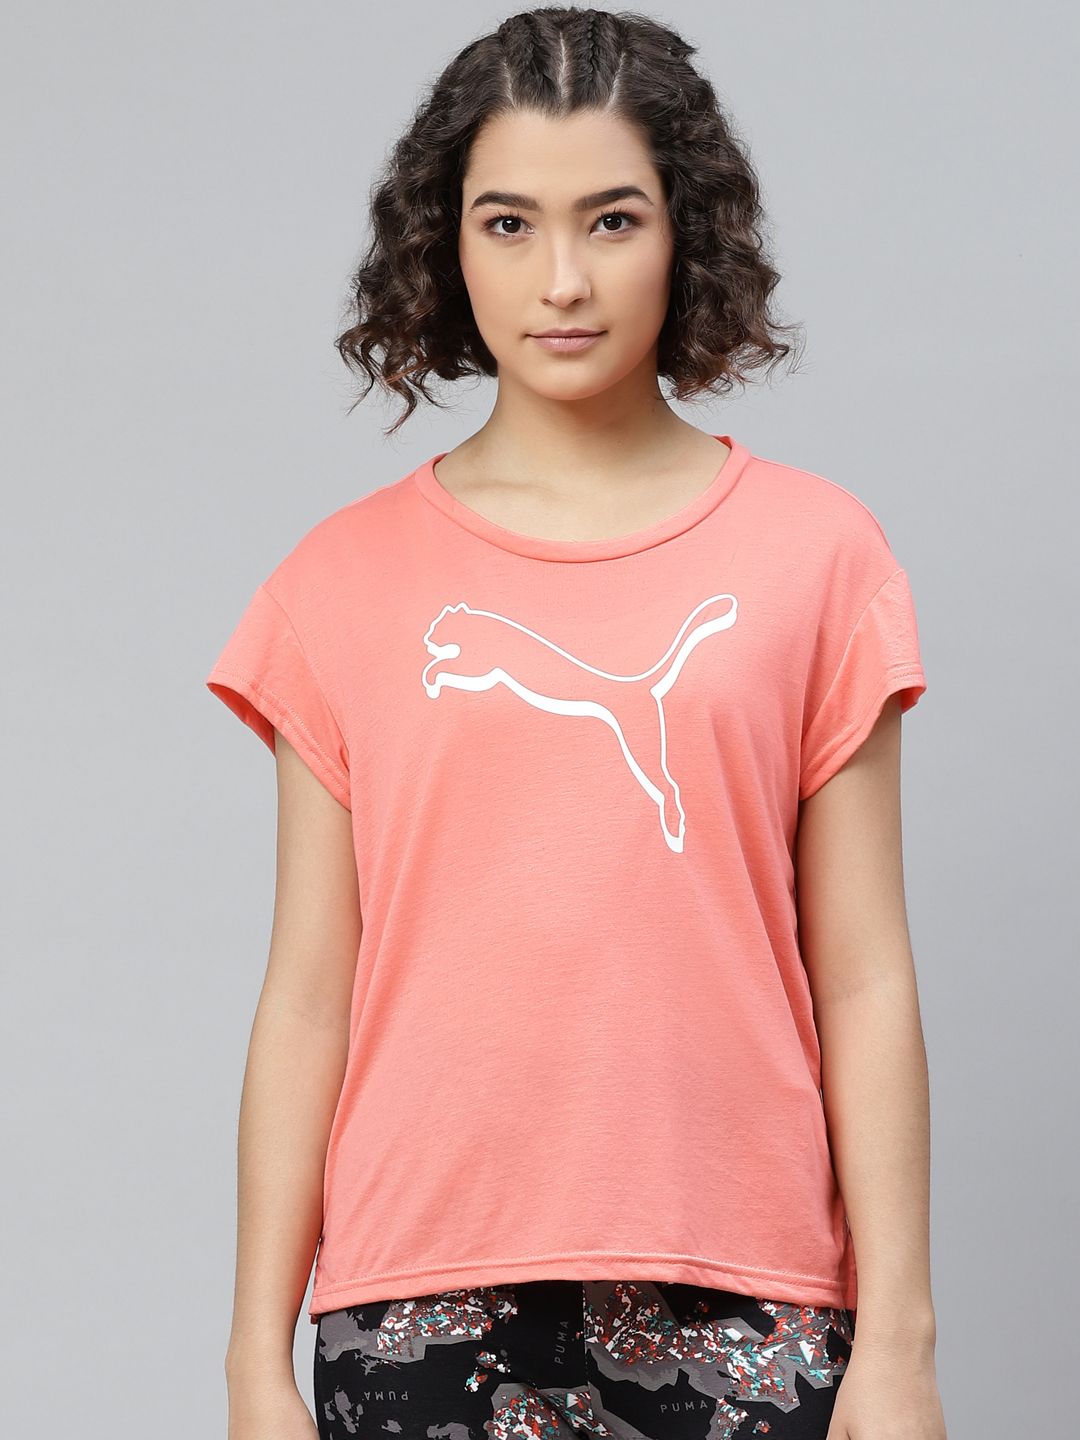 Puma Women Peach-Coloured & White Printed Round Neck T-shirt Price in India